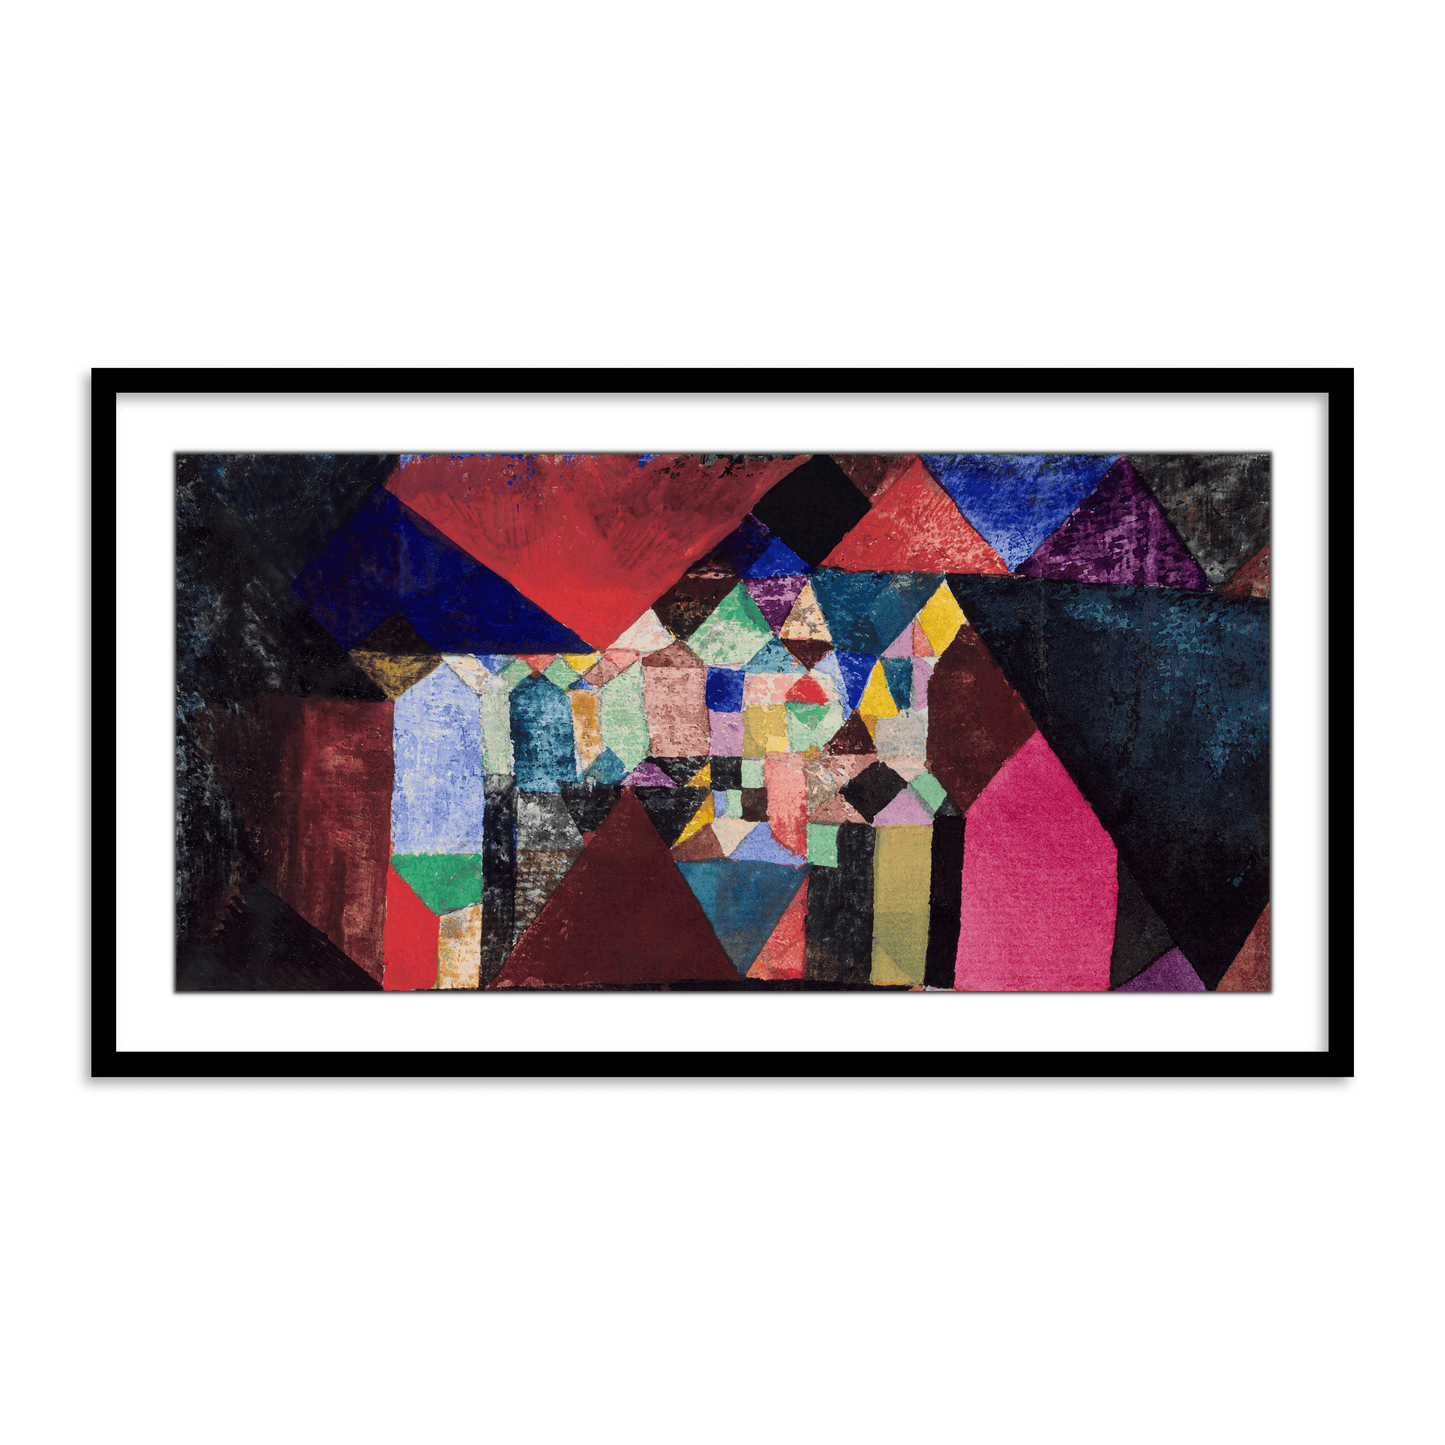 Municipal Jewel by Paul Klee